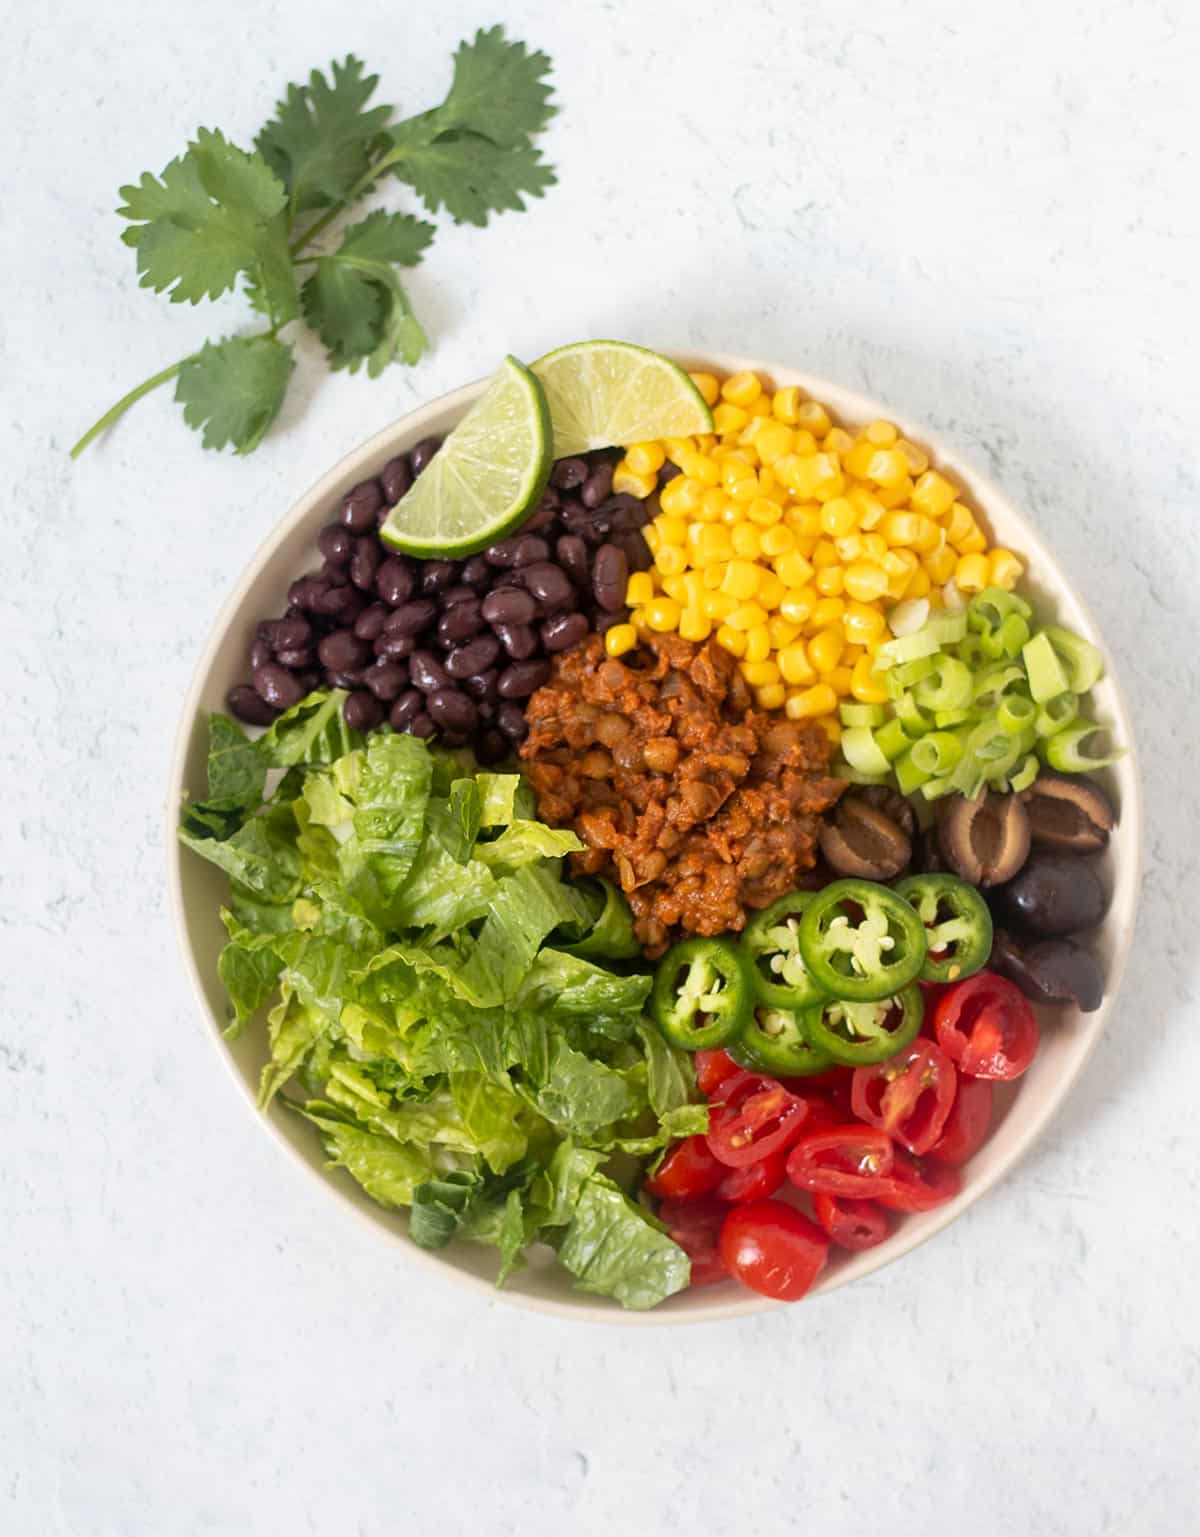 https://stephaniesain.com/wp-content/uploads/2021/09/Healthy-taco-salad2.jpg